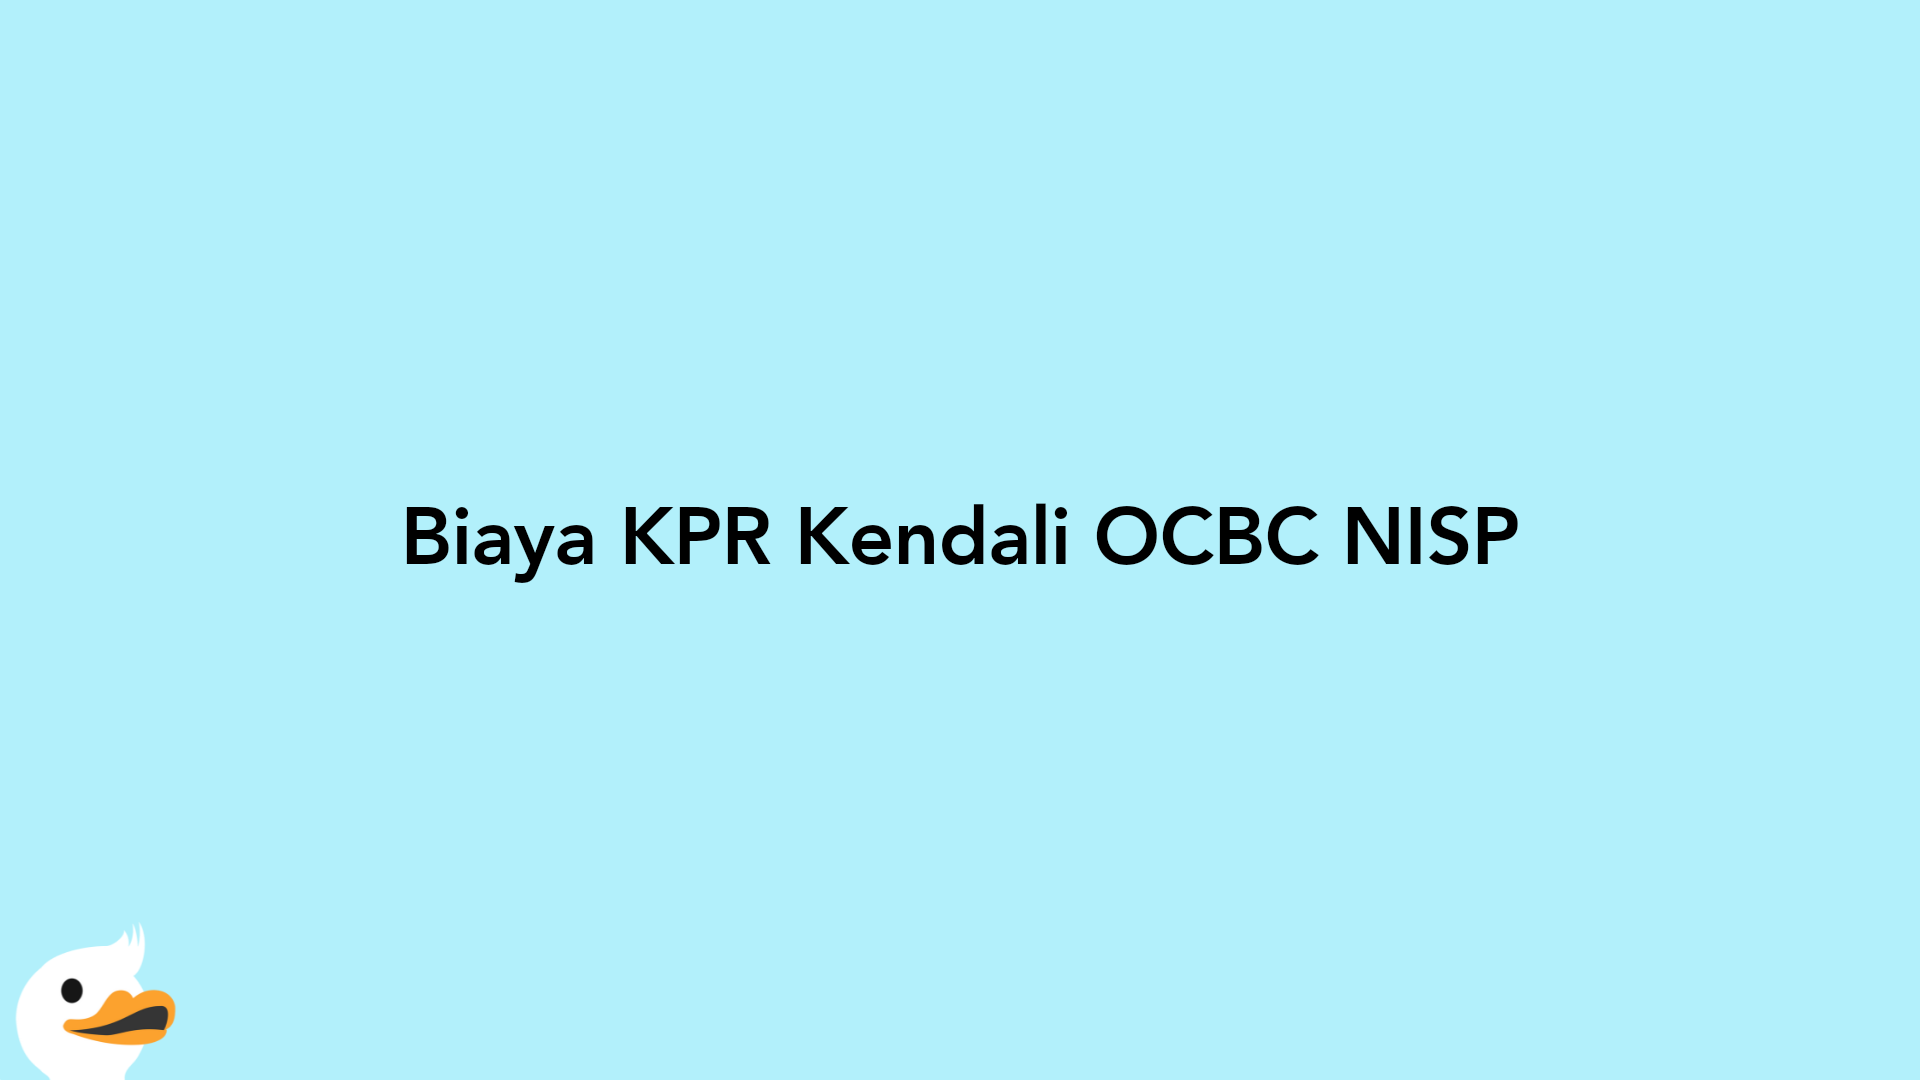 Biaya KPR Kendali OCBC NISP